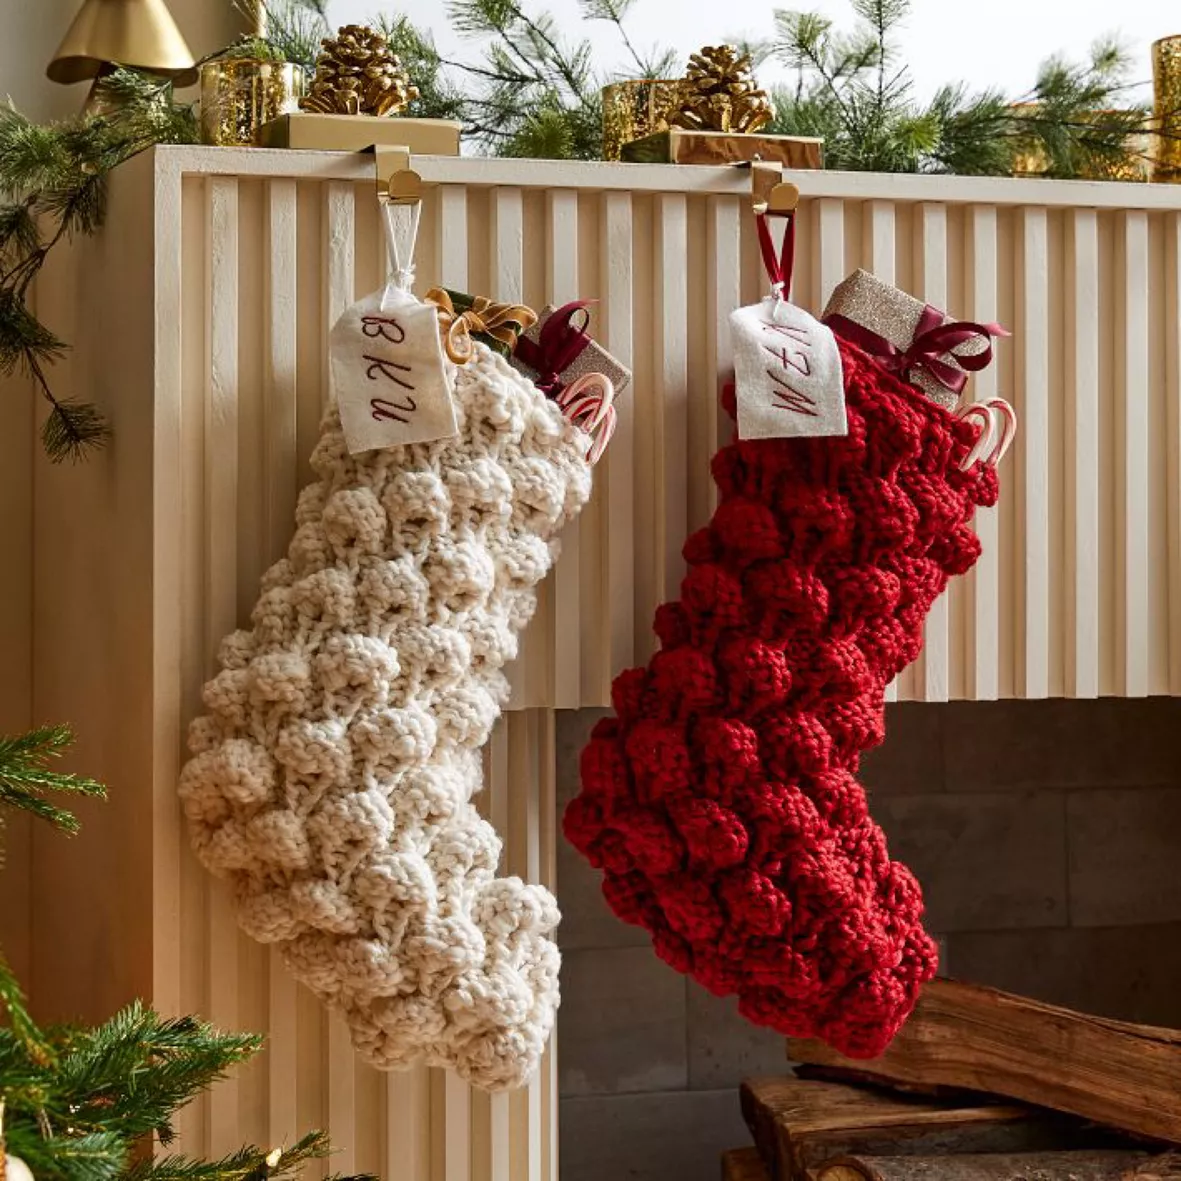 Chunky Knit Stockings You Need This Christmas - Where to Find Chunky Knit  Stockings